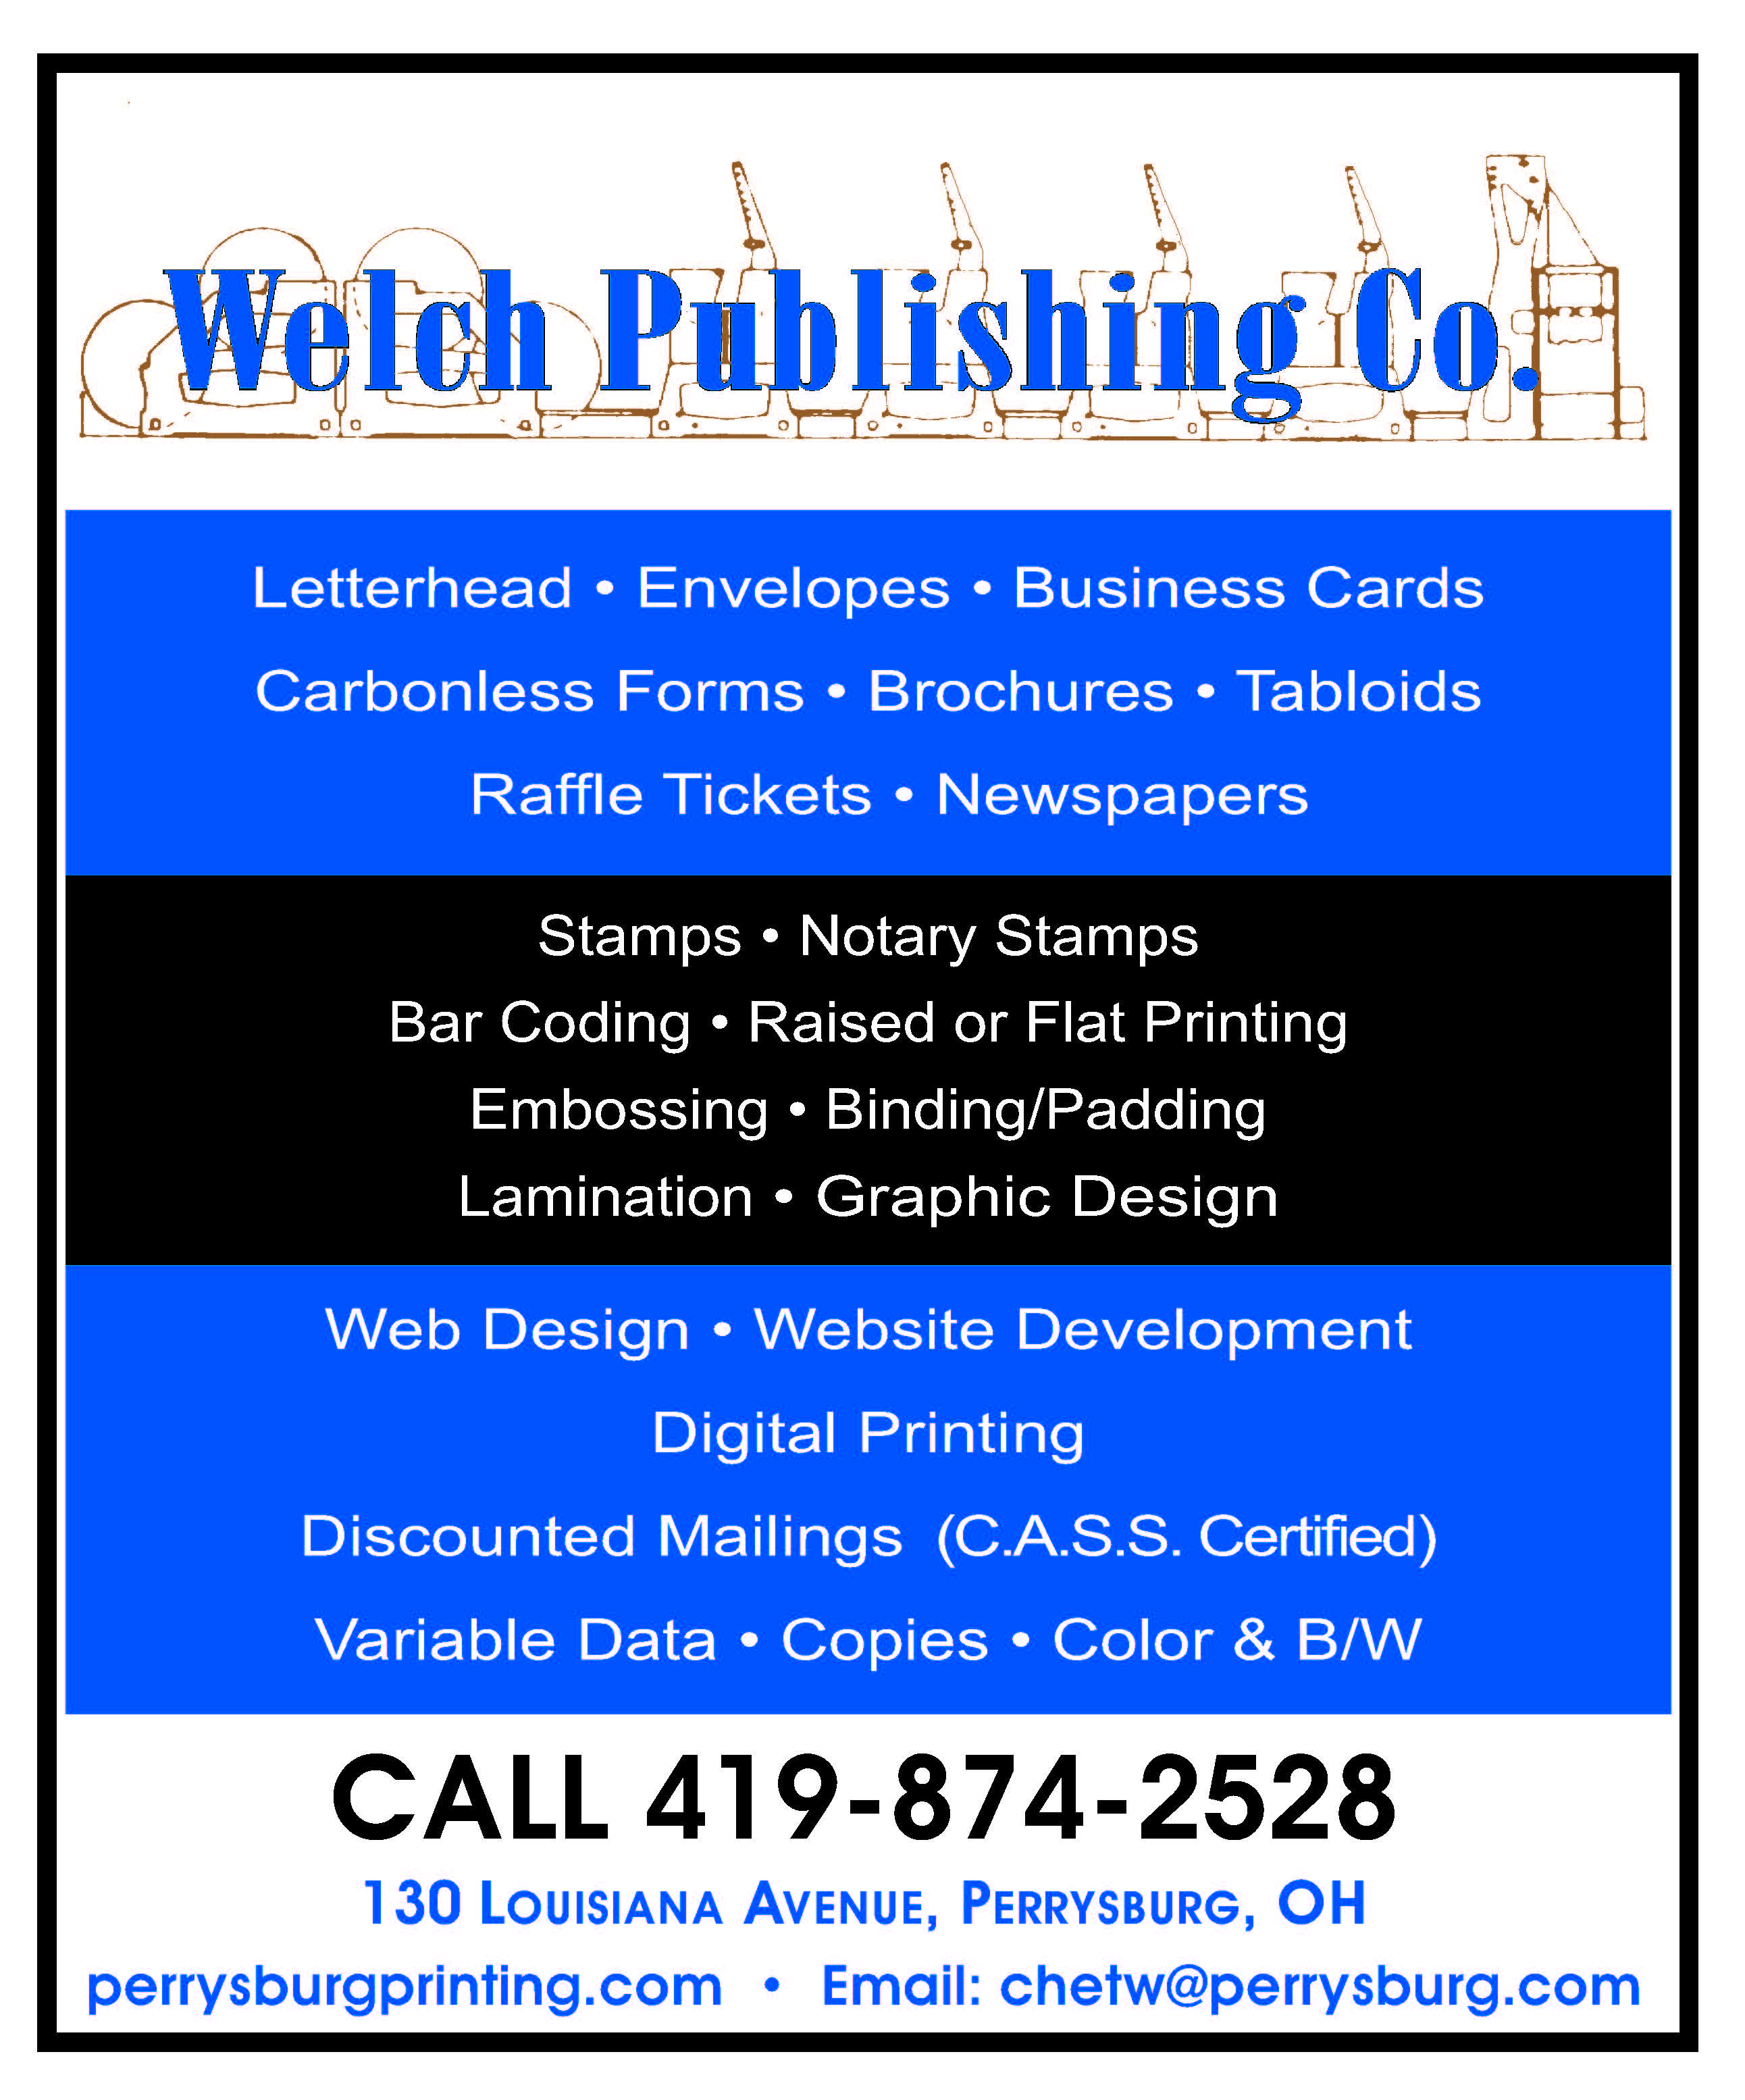 Welch Publishing